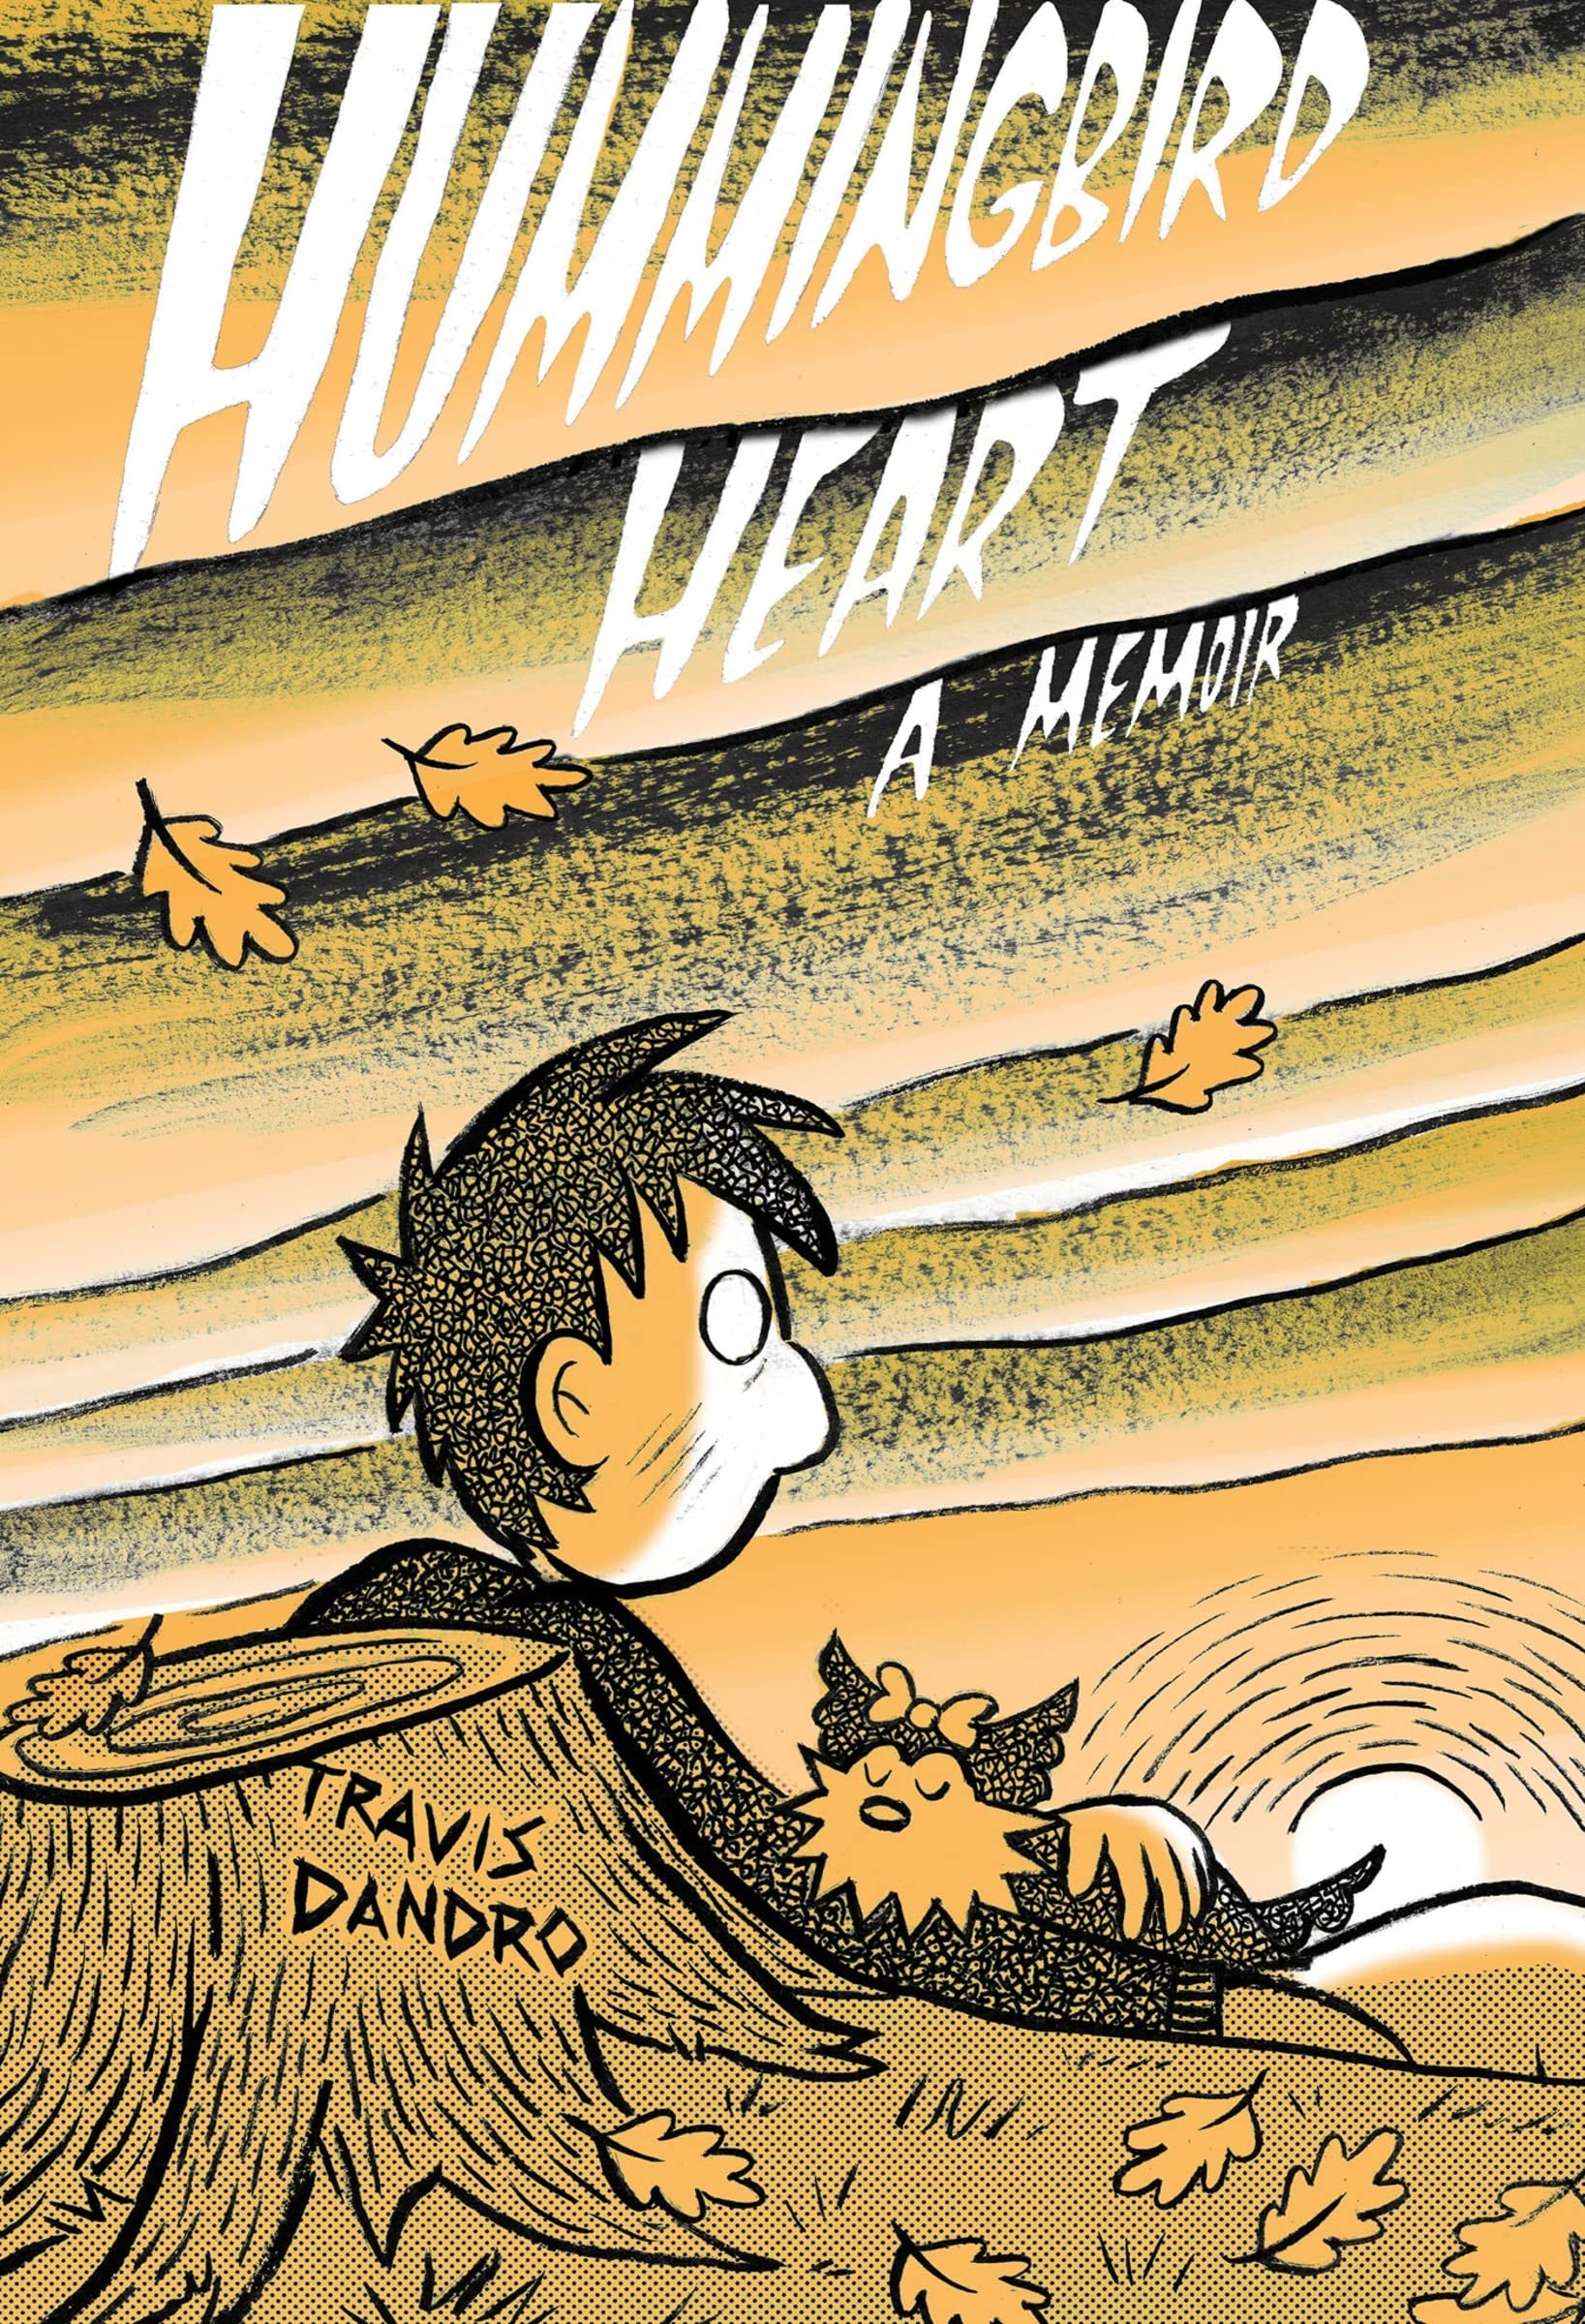 Hummingbird Heart book cover